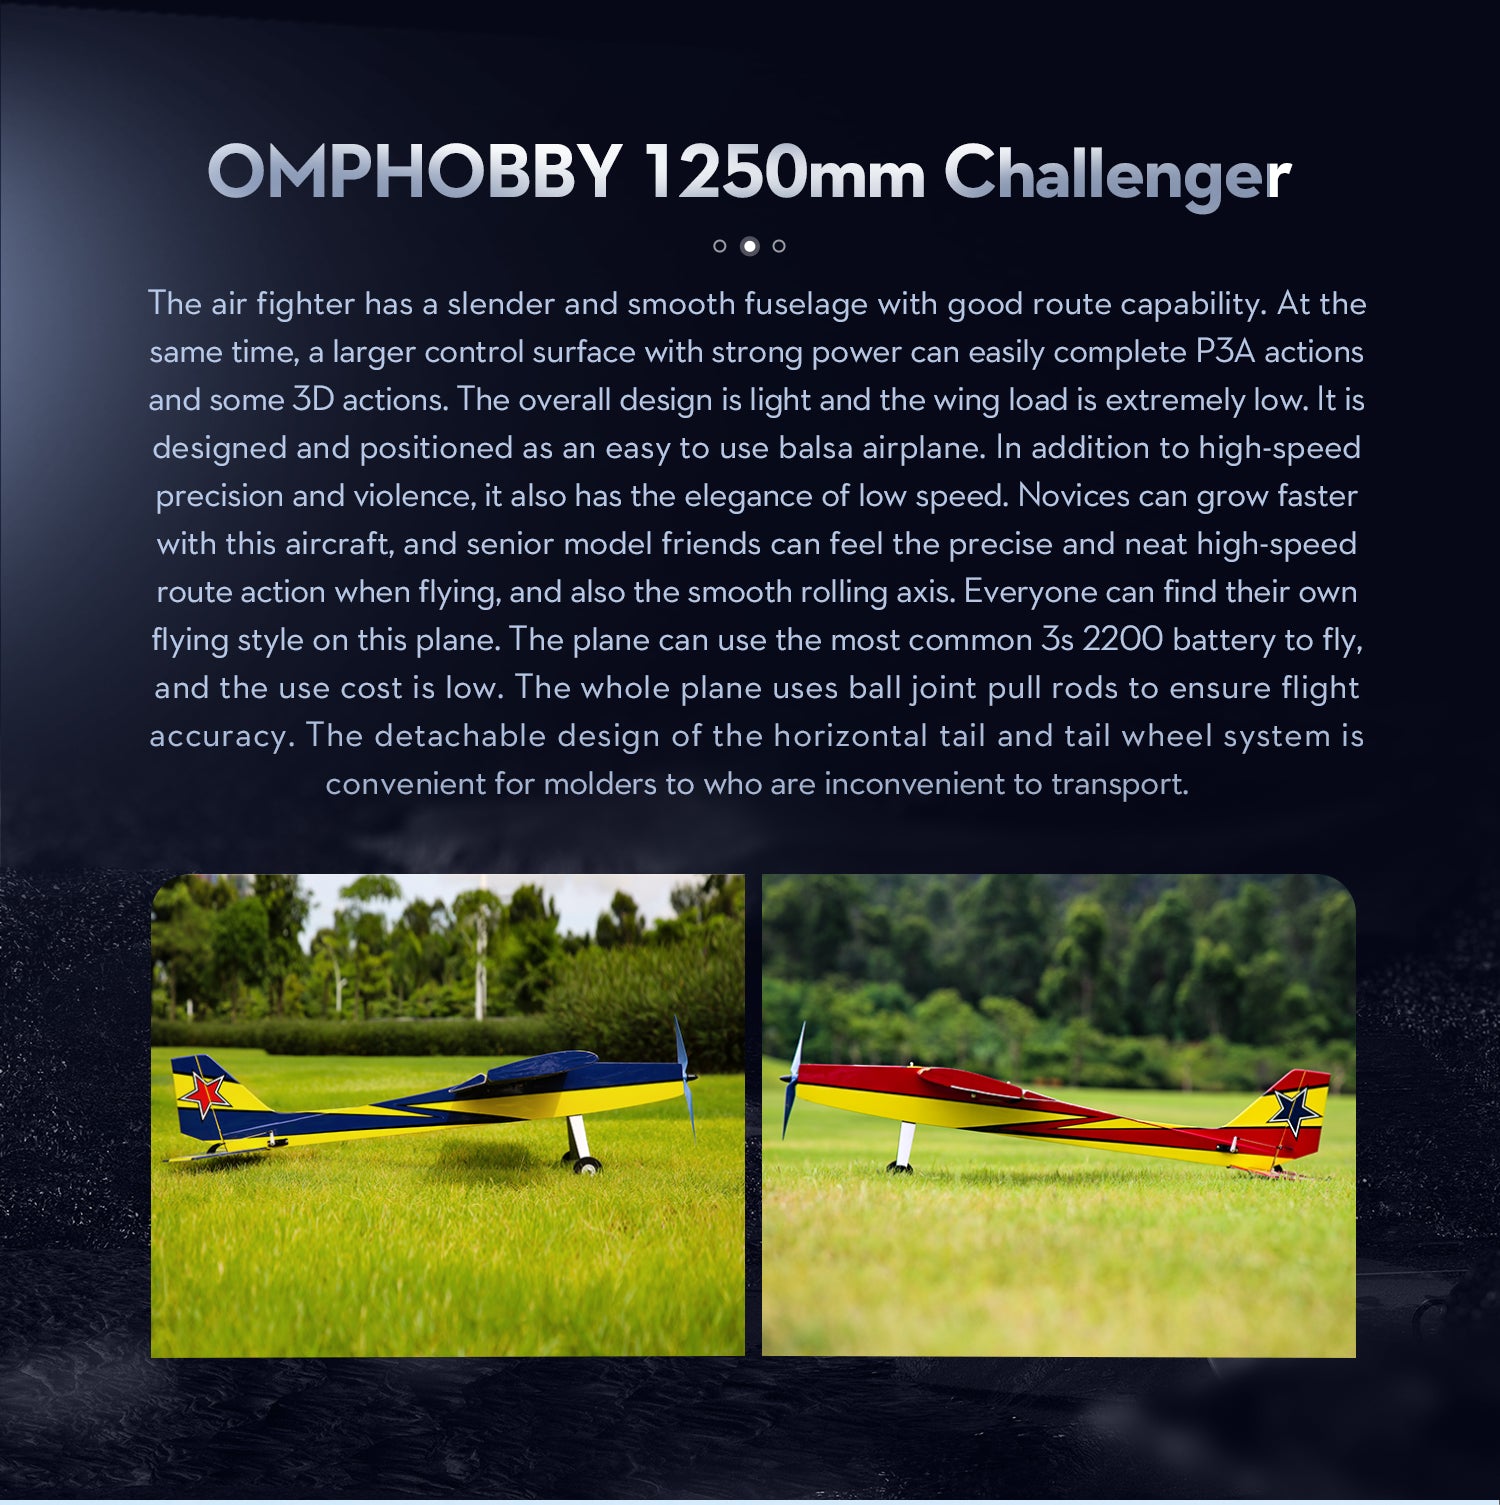 OMPHOBBY Challenger Description